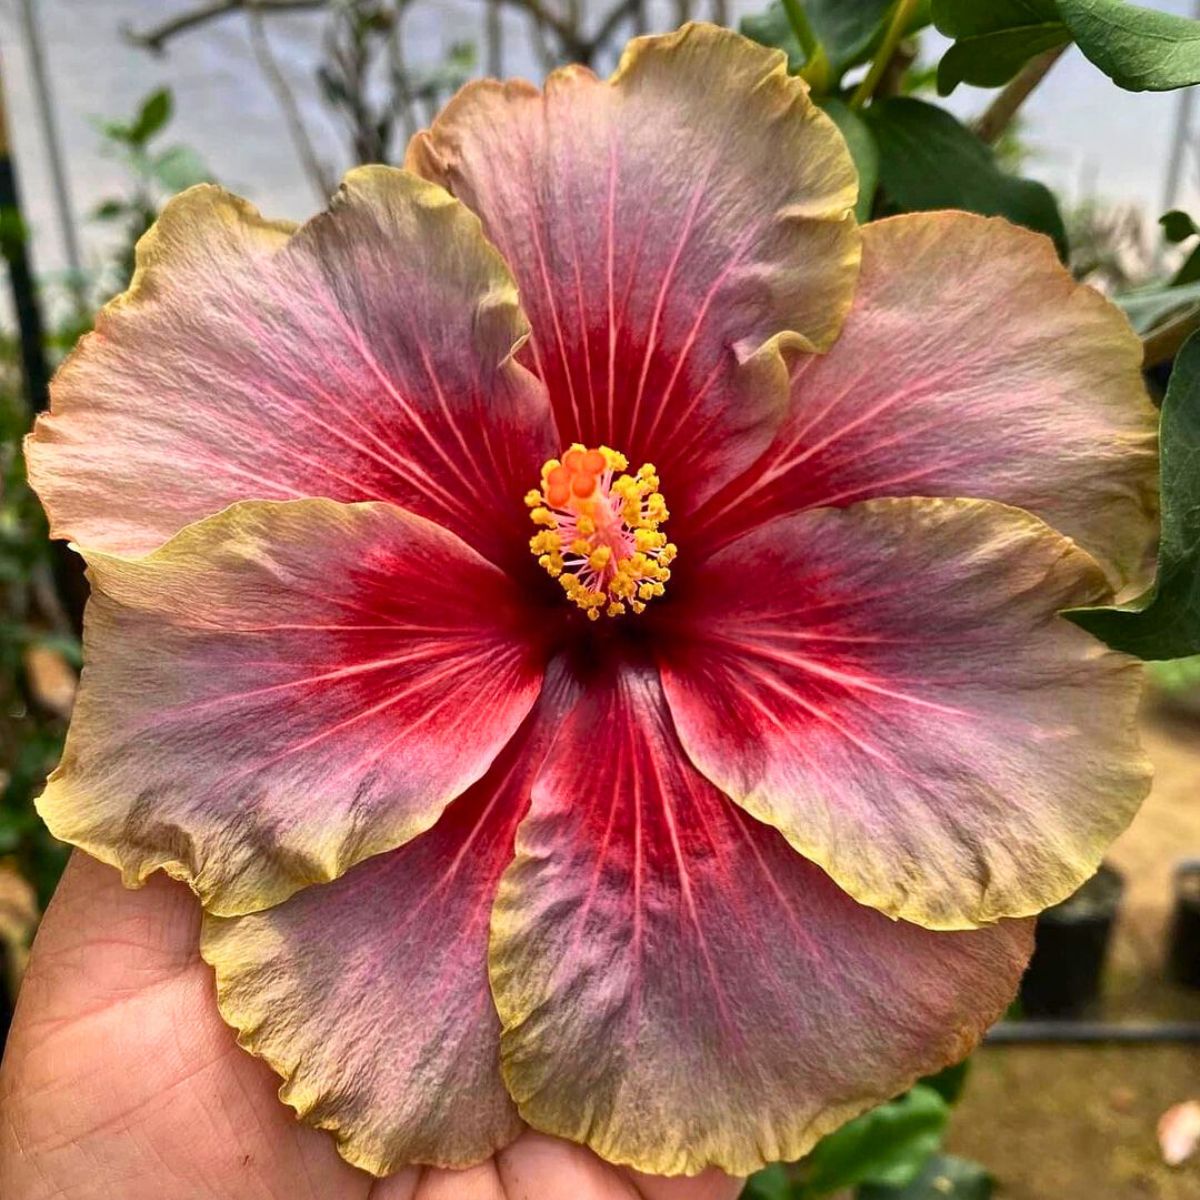 Hawaiian hibiscus flower